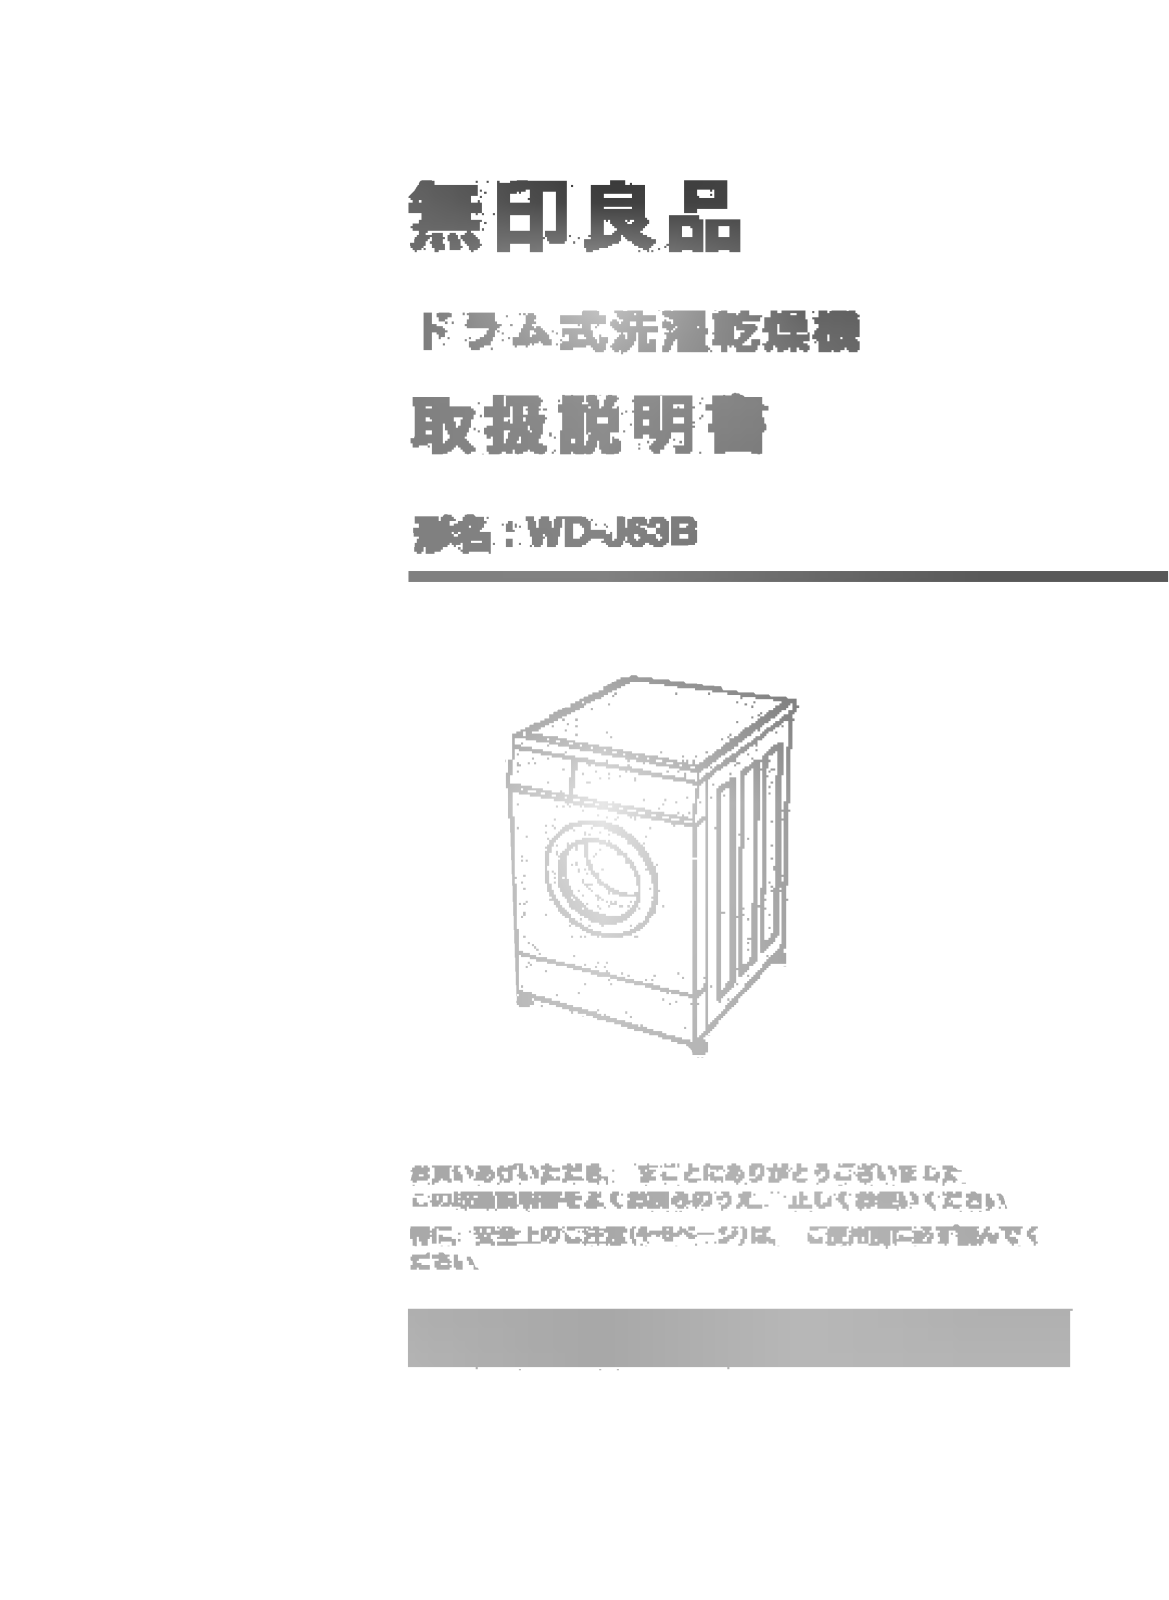 LG WD-1232RD instruction manual